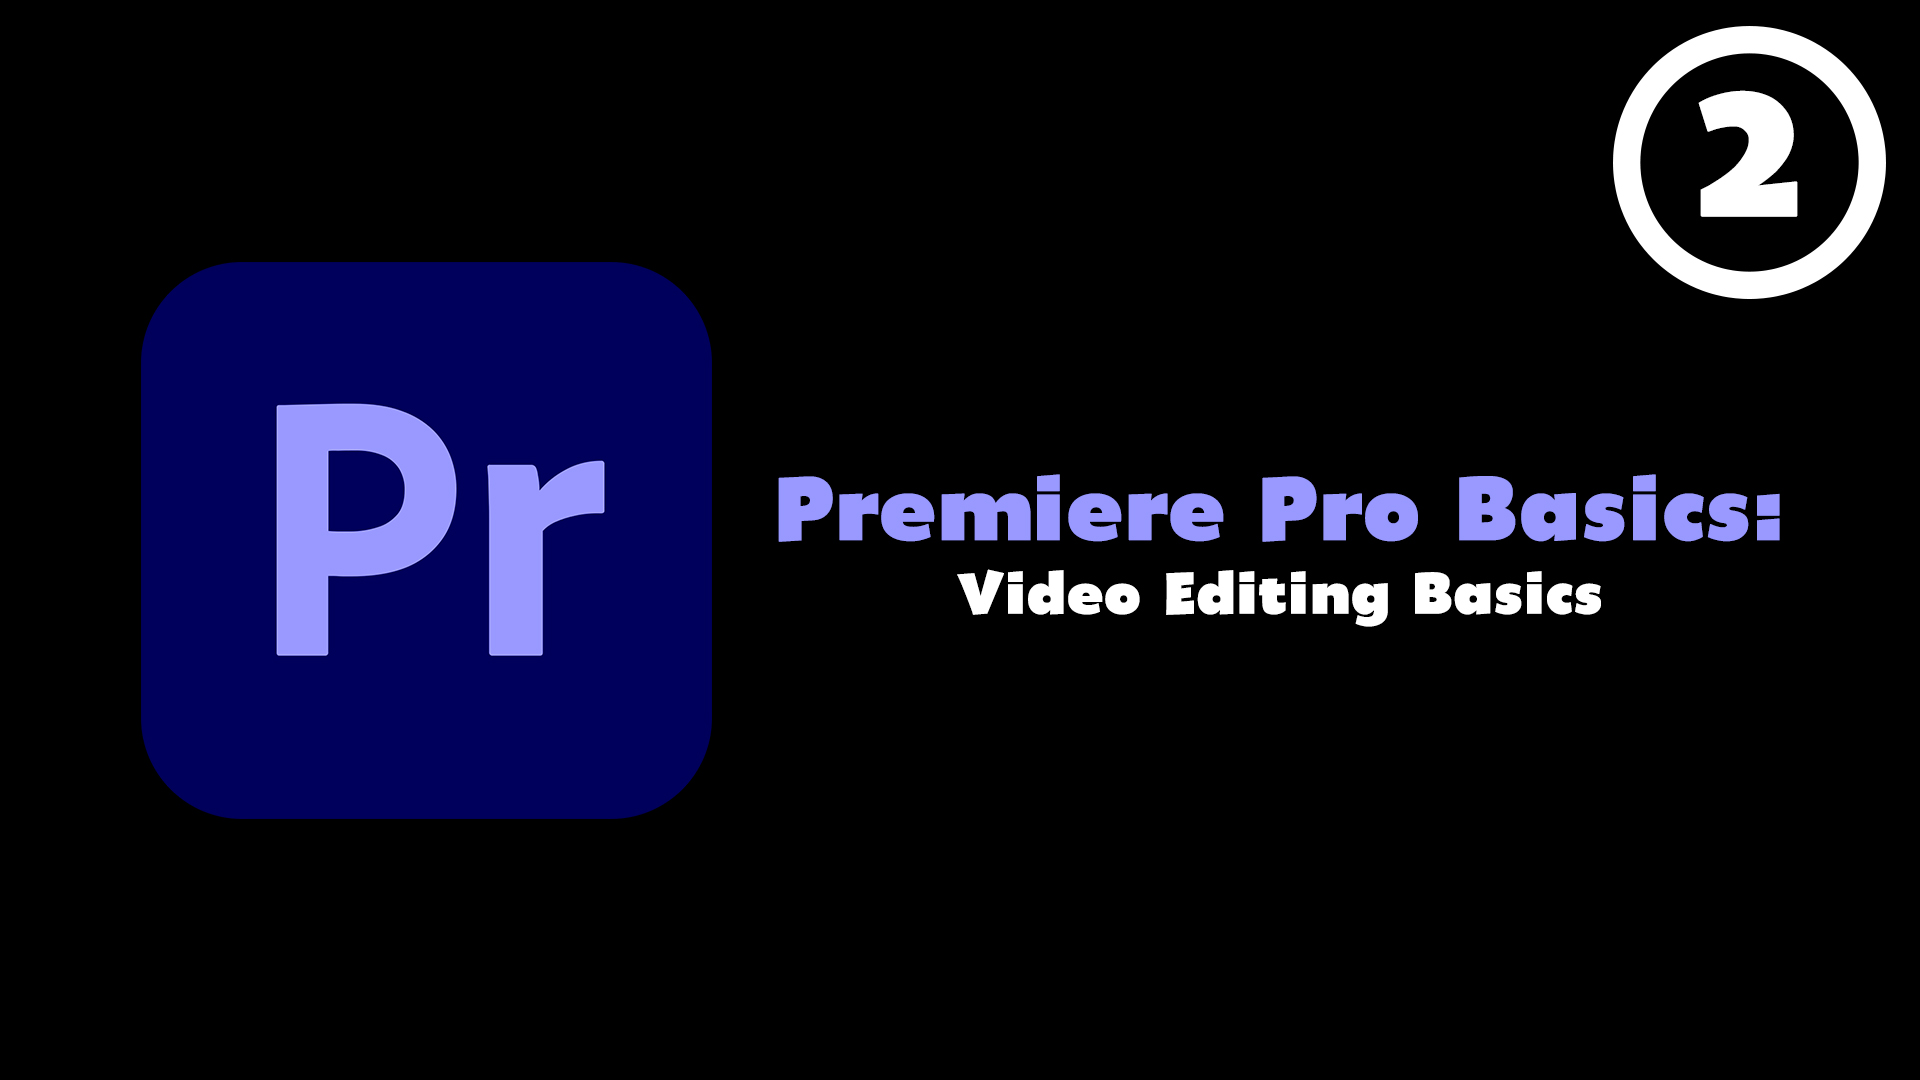 Premiere Pro Basics Course (Episode 2) - Video Editing Basics